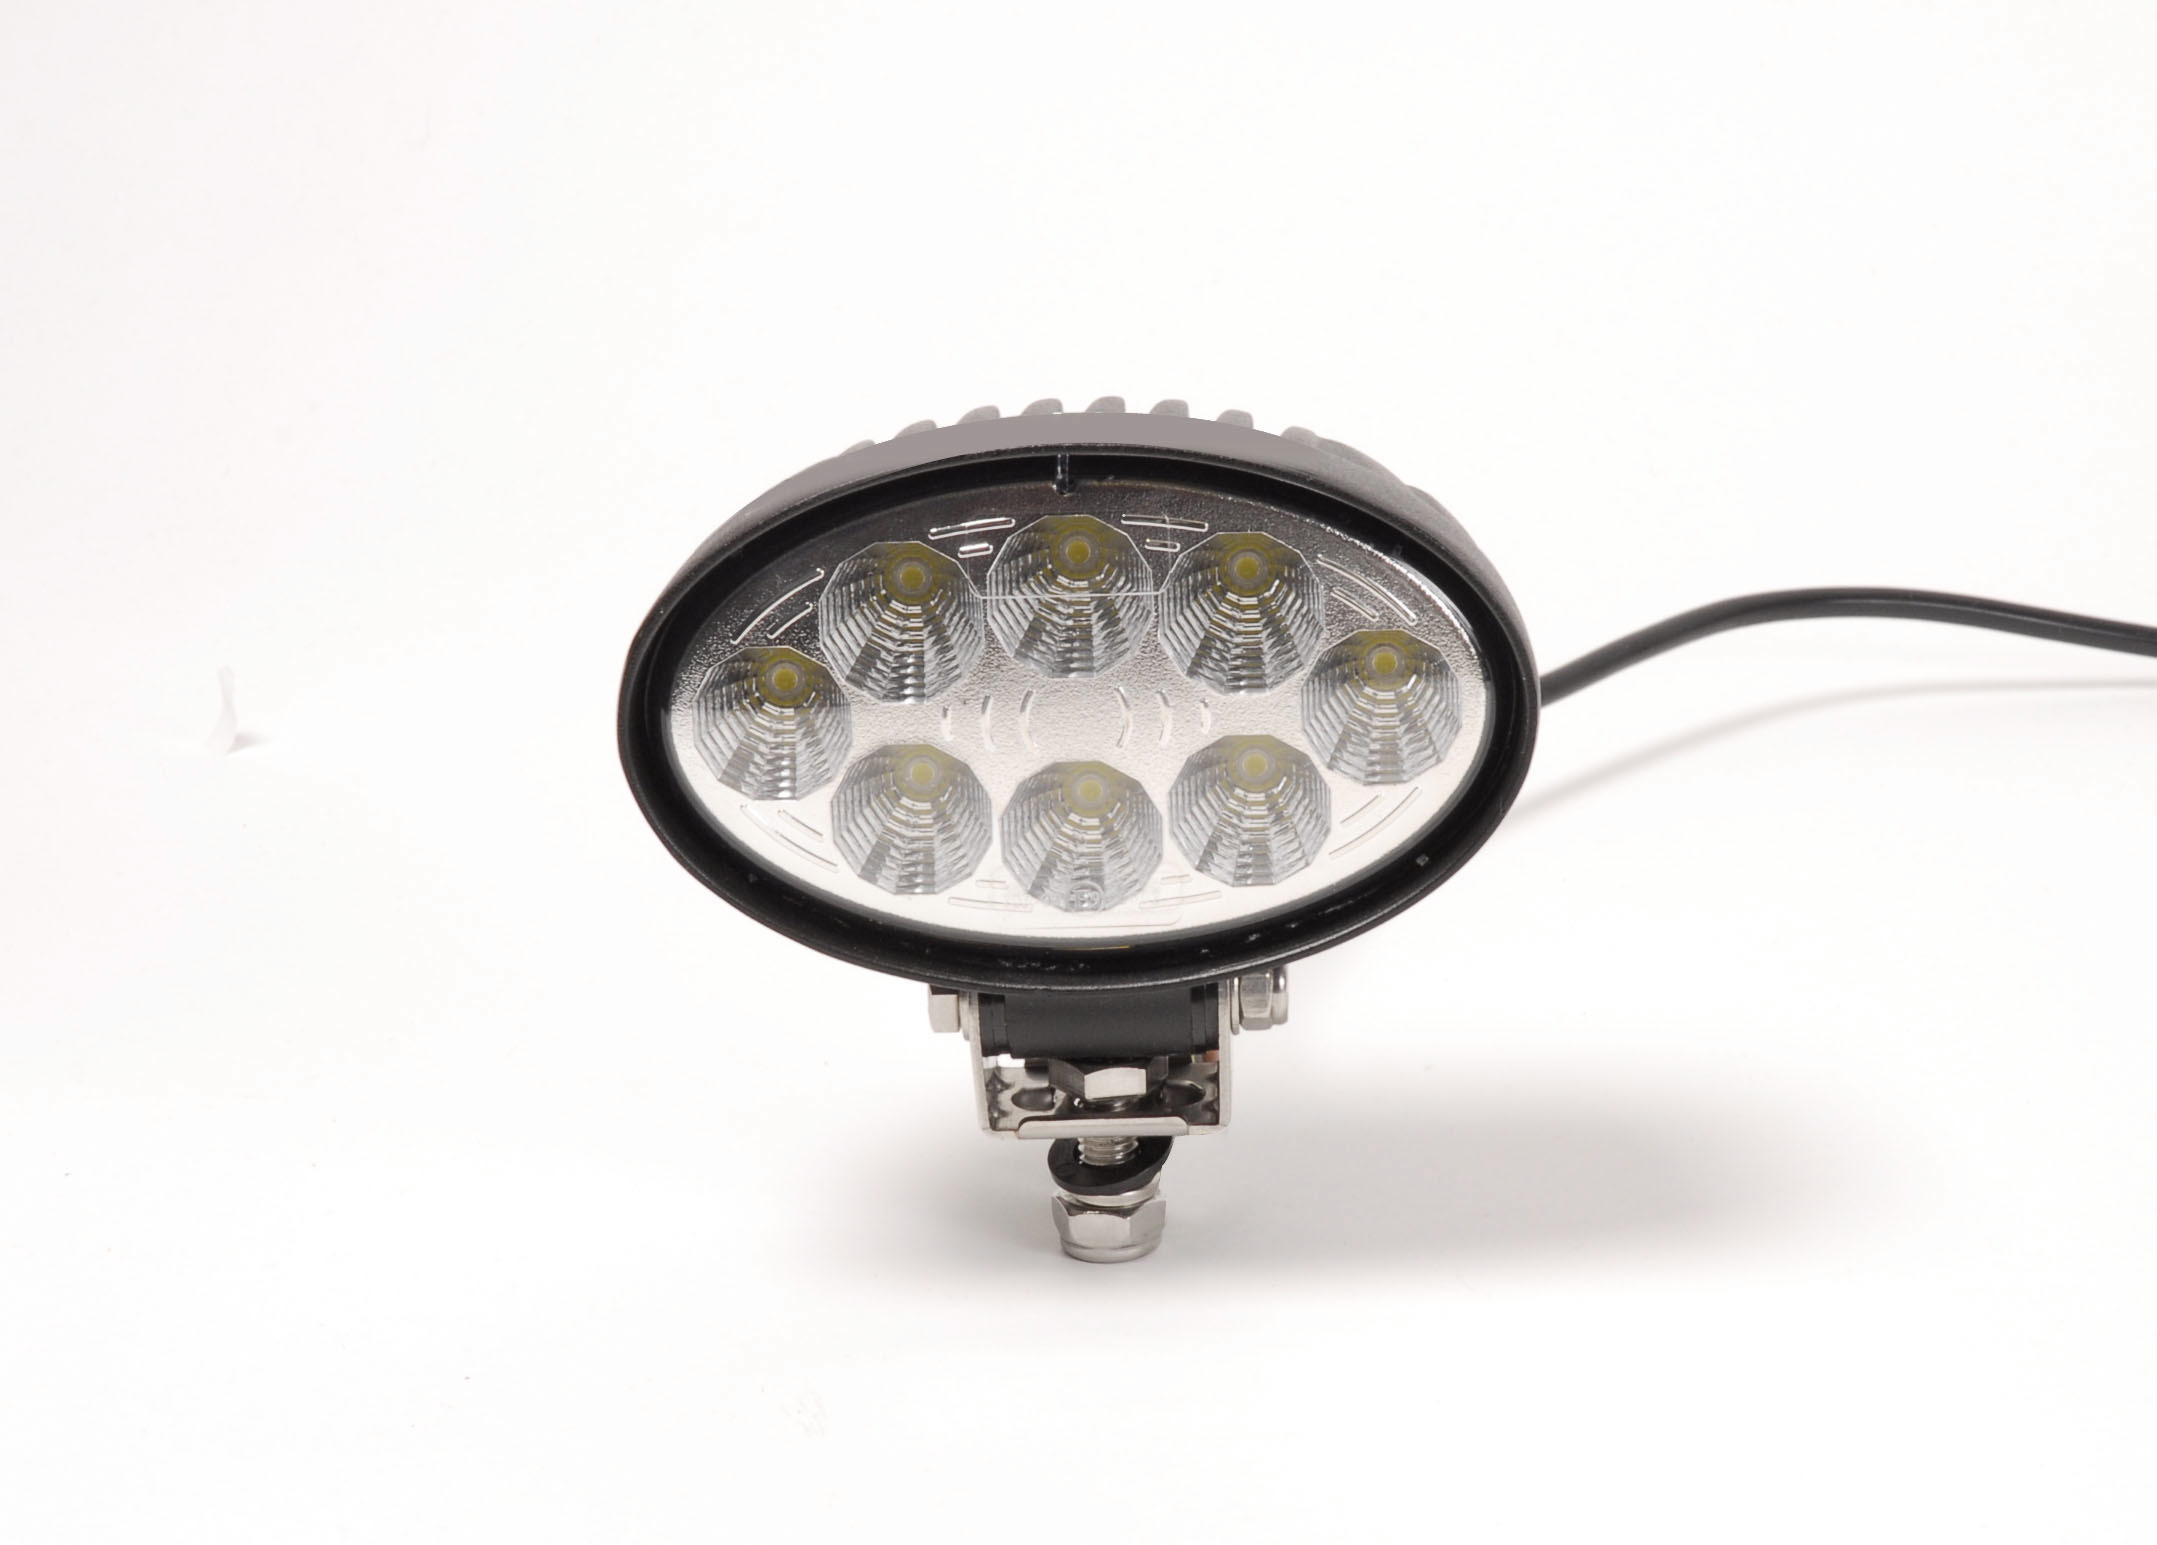 Britax L81 LED 1200 lumen work lamp